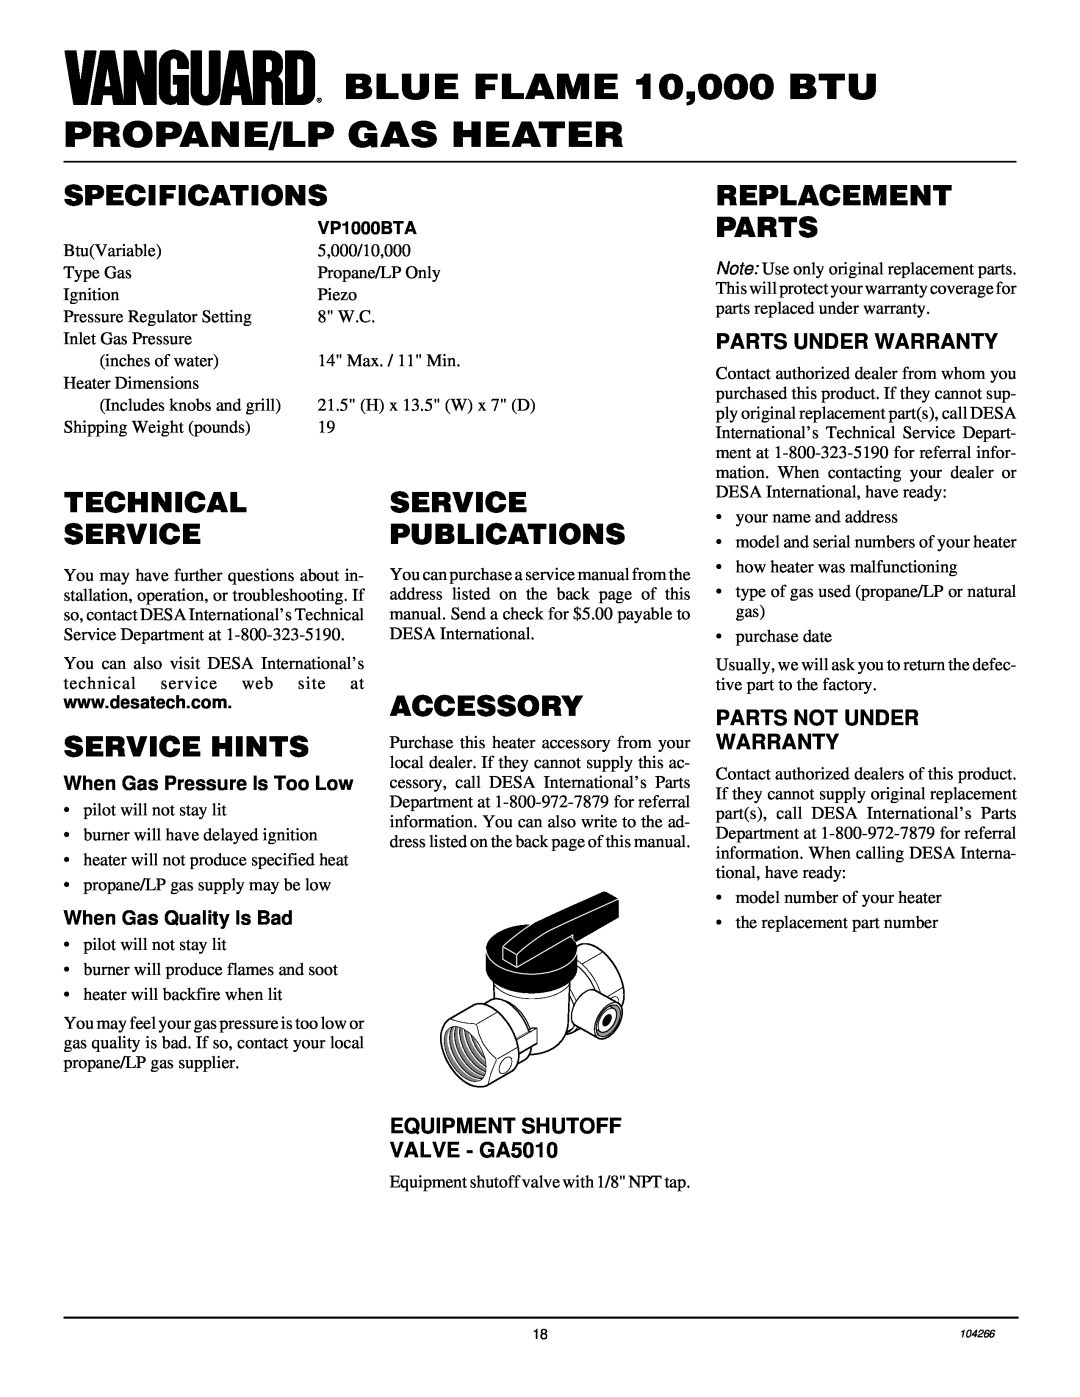 Desa VP1000BTA Specifications, Replacement Parts, Technical Service, Service Hints, Service Publications, Accessory 